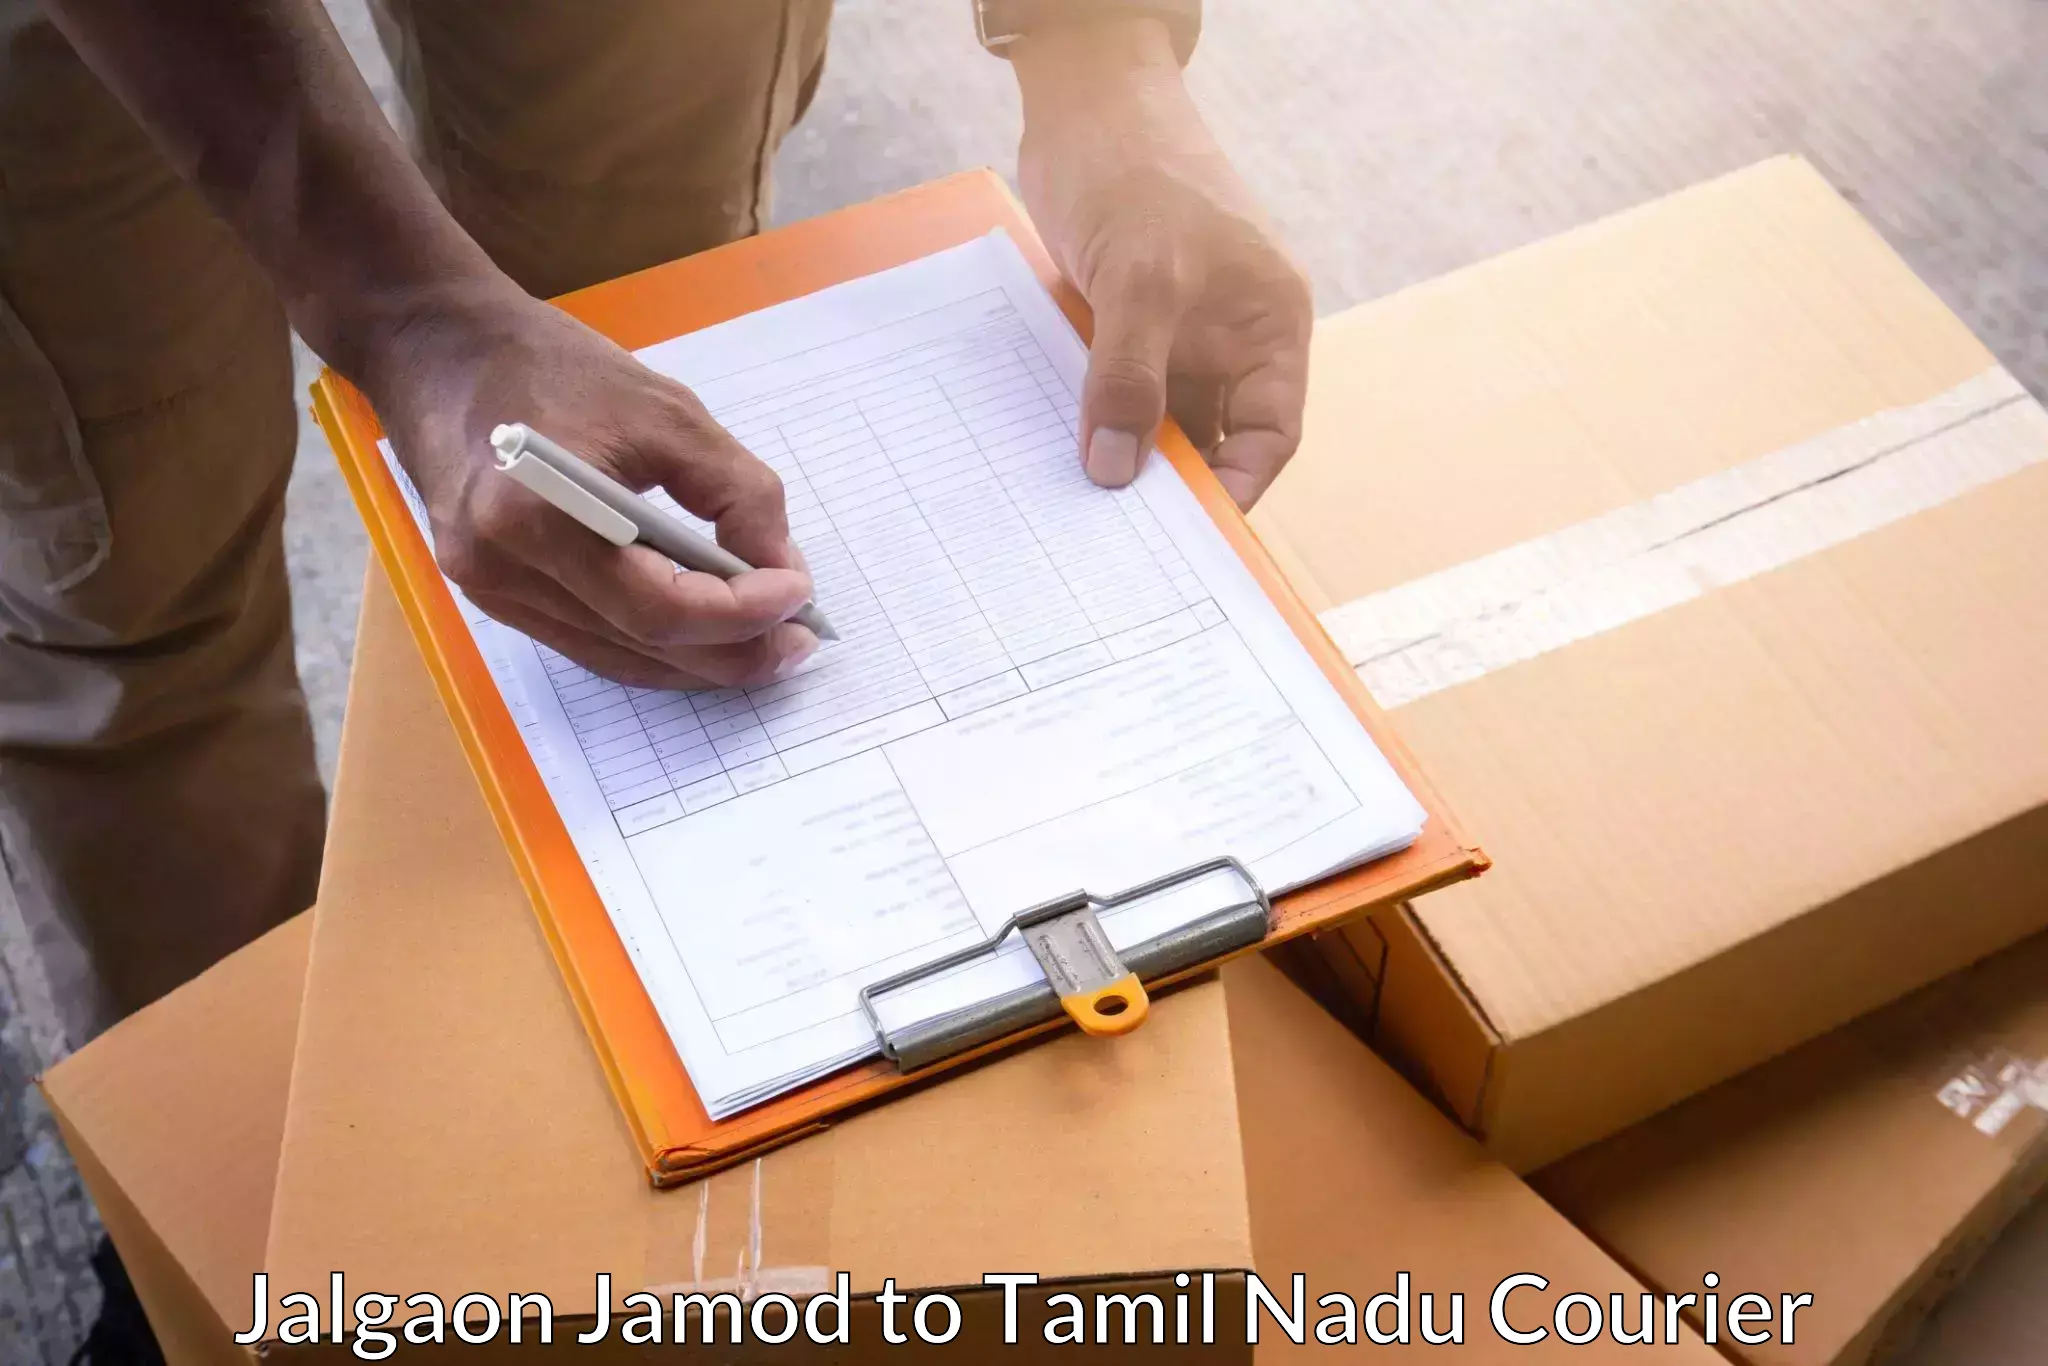 State-of-the-art courier technology Jalgaon Jamod to Aruppukkottai